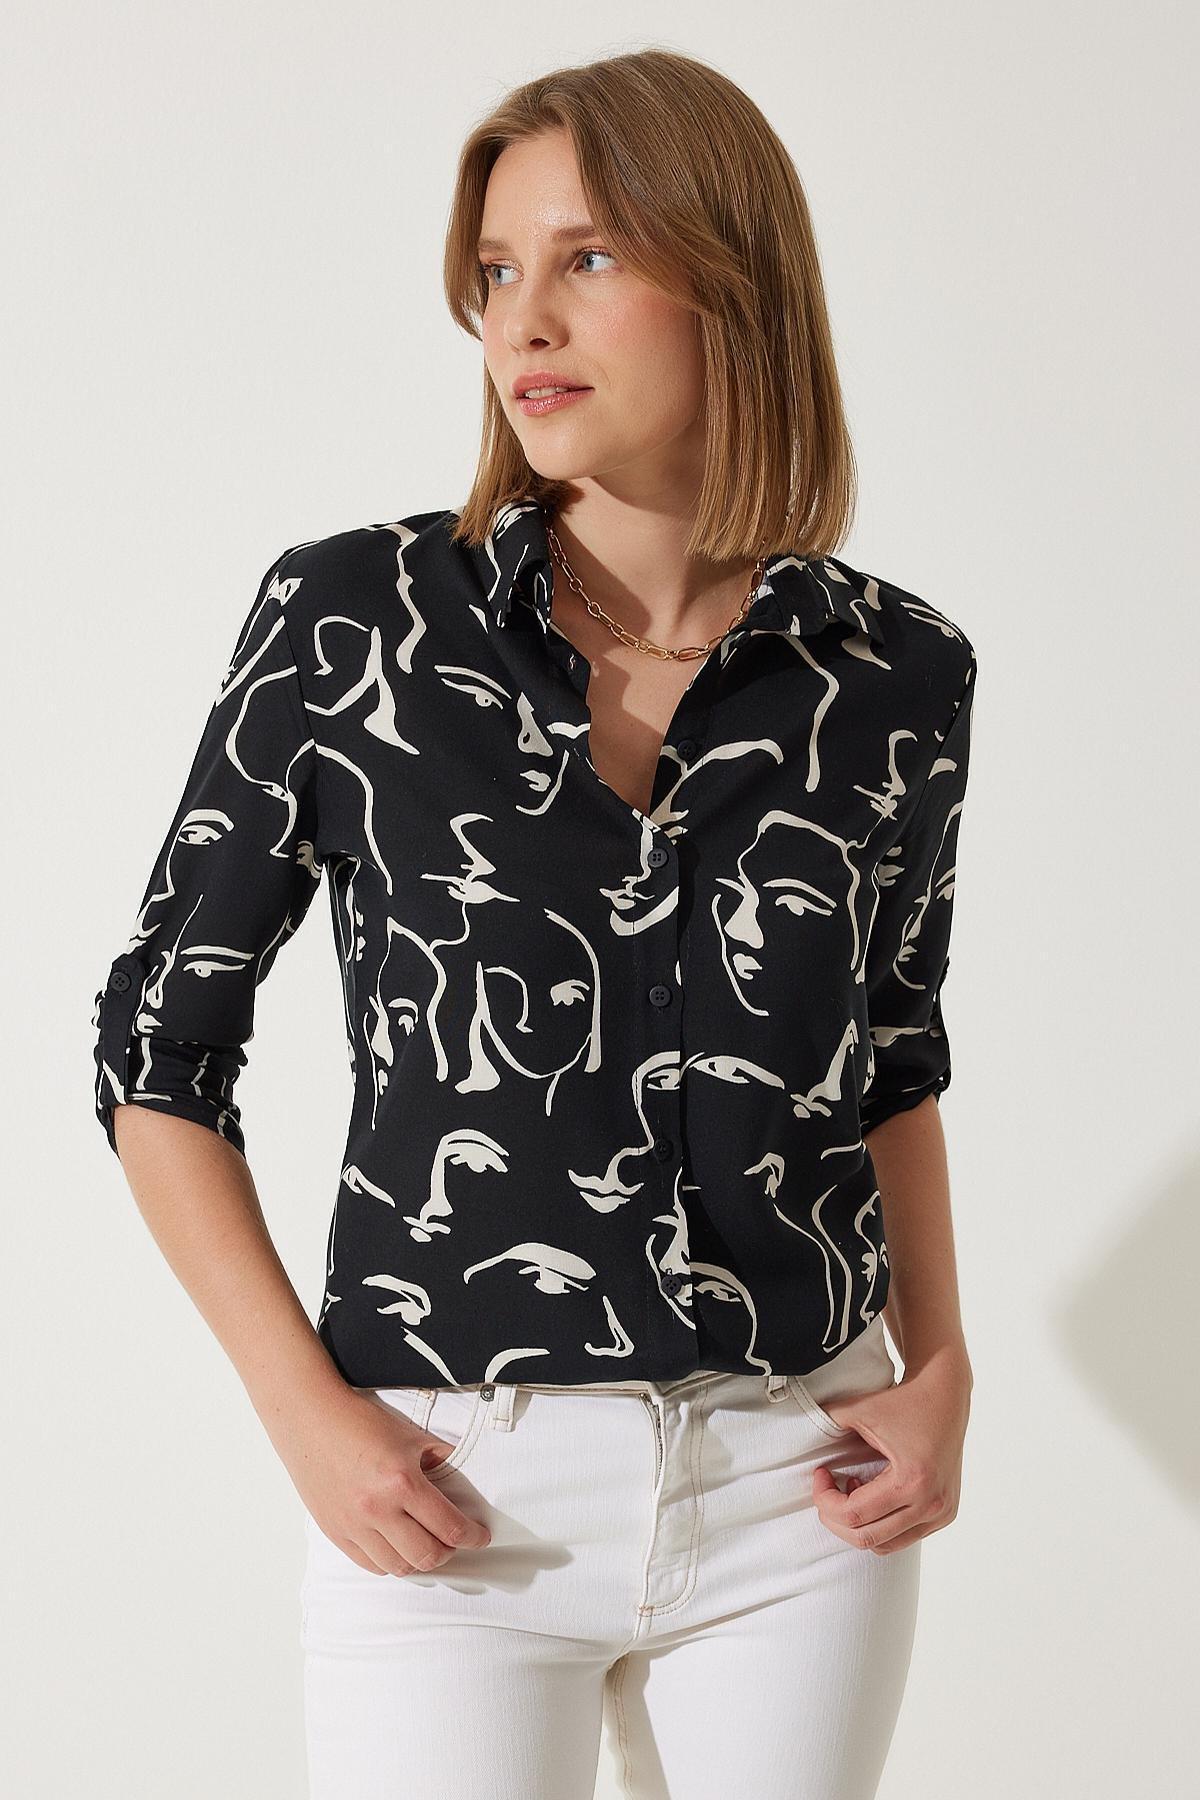 Happiness Istanbul - Black Animal Print Collared Shirt